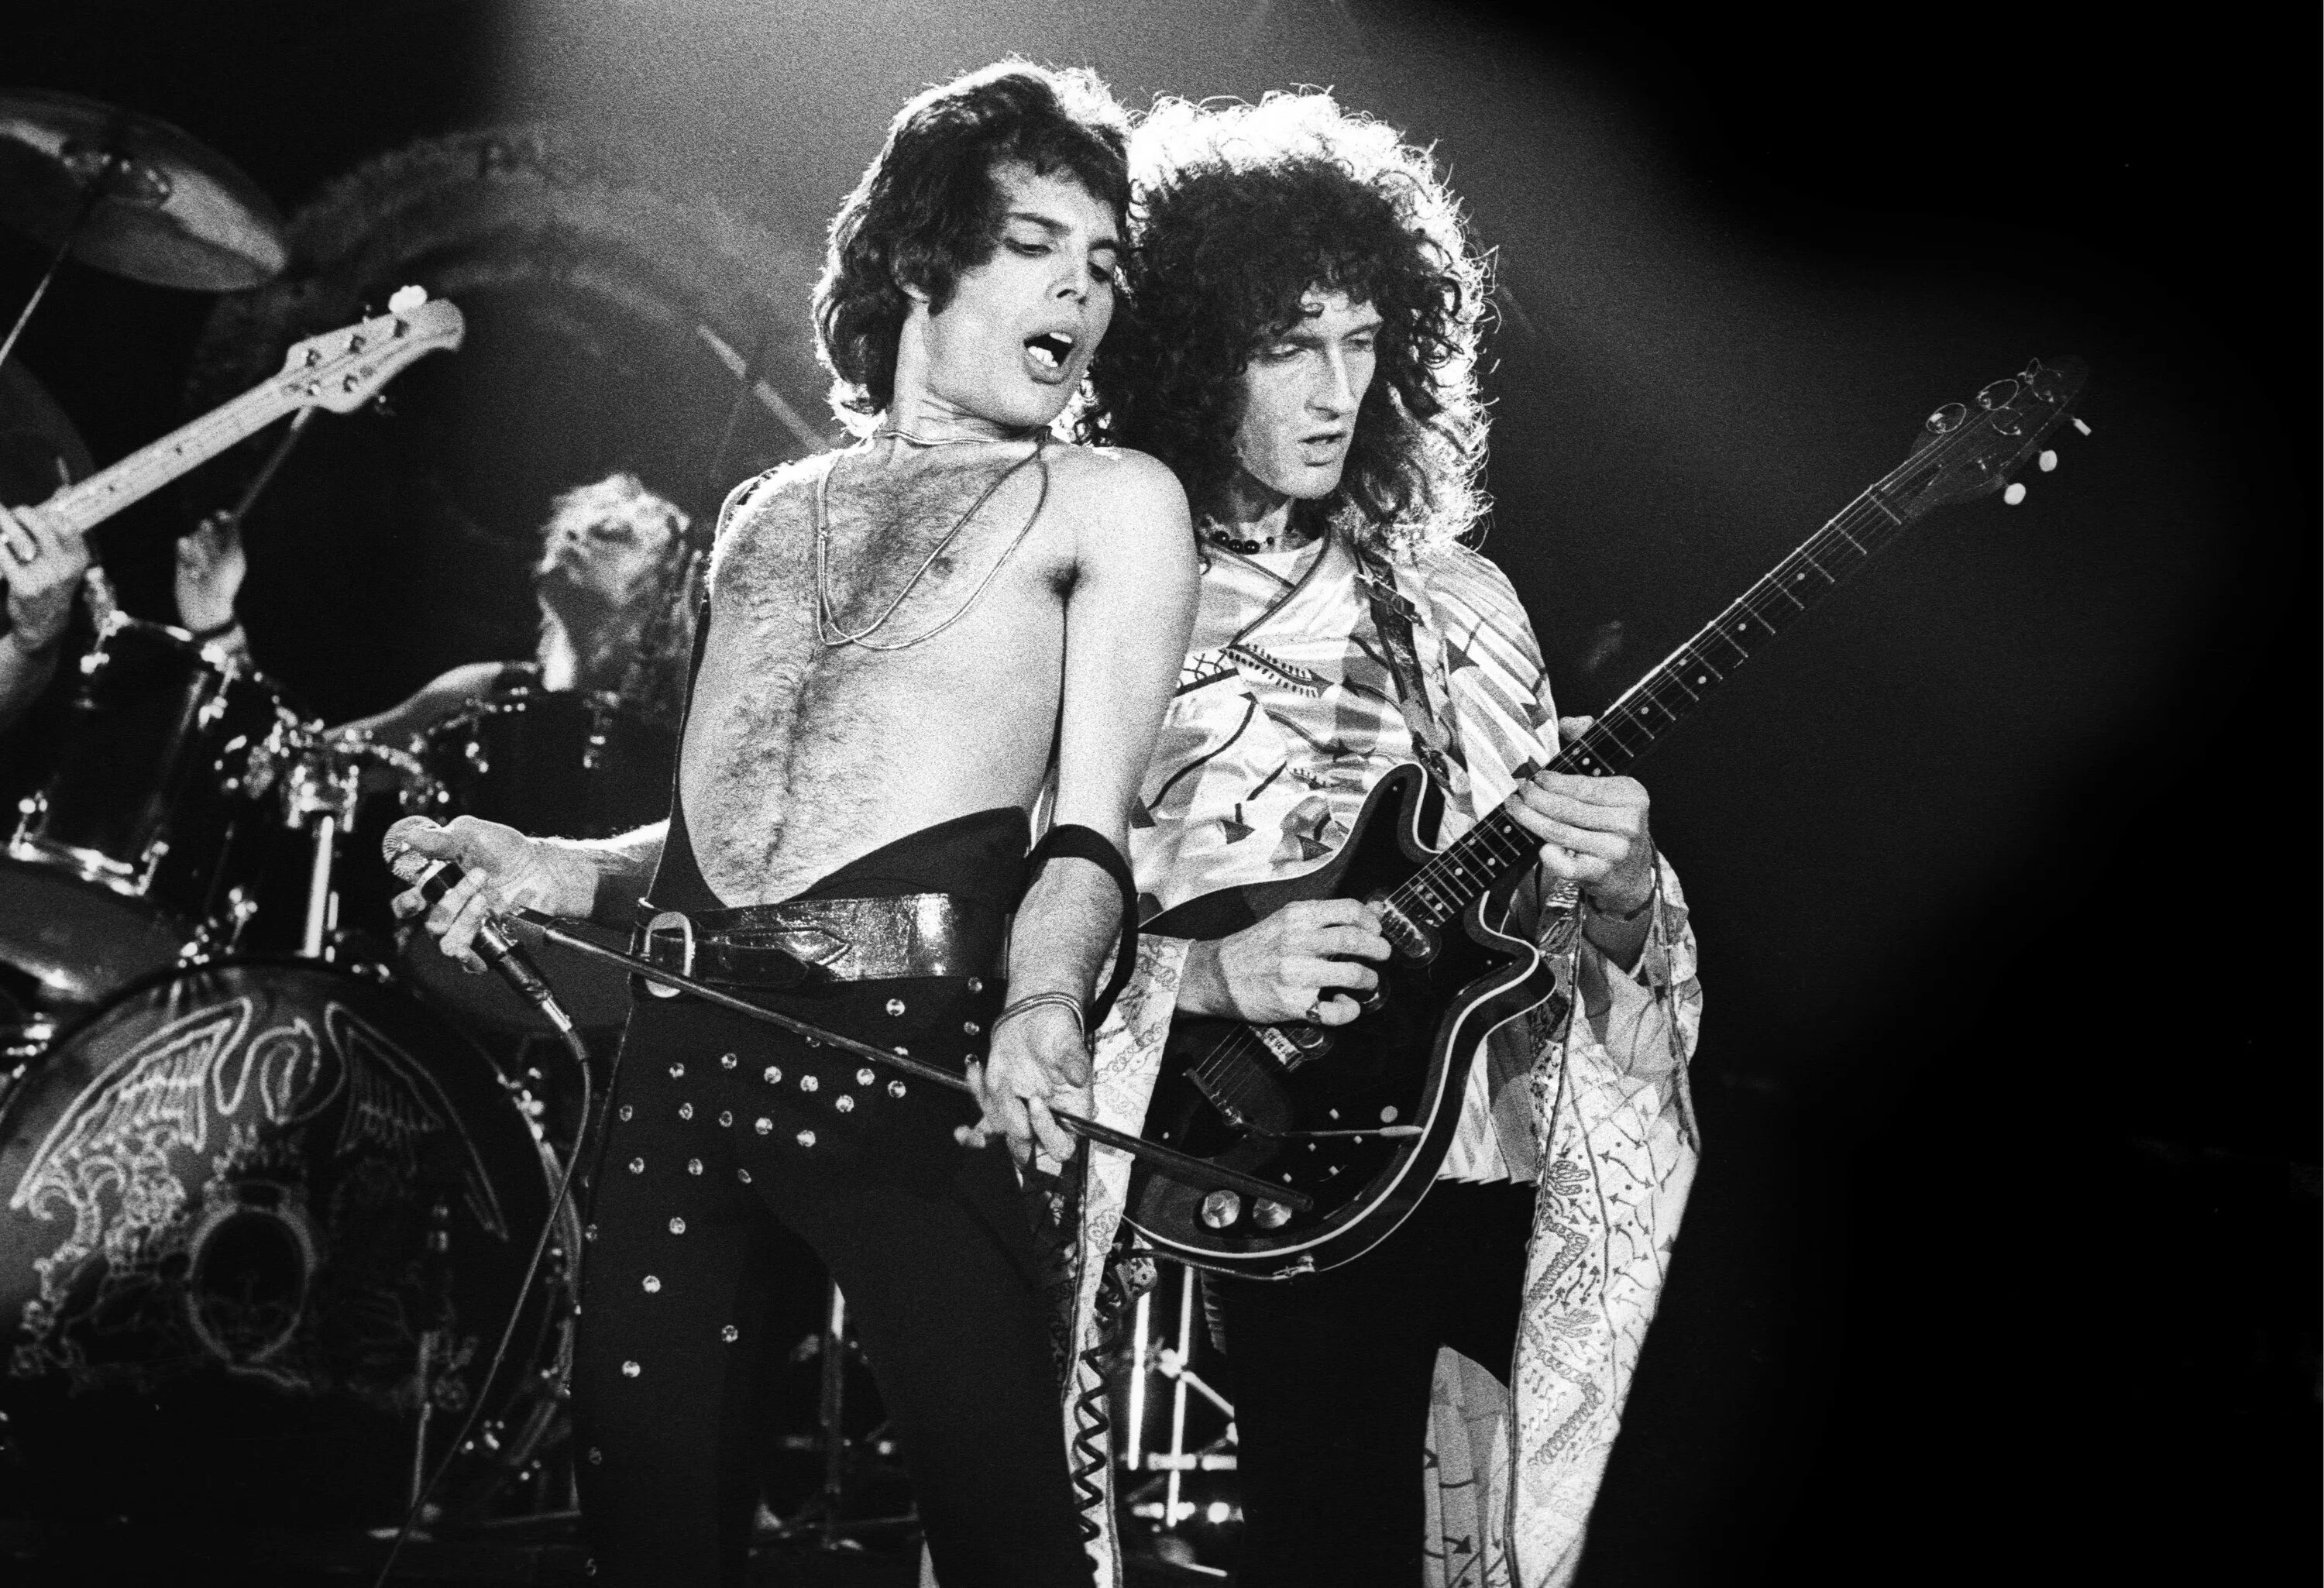 Queen band. Группа Queen 70s. Брайан Мэй на концерте Queen. Группа Квин фото. Группа Queen Фредди Меркьюри.